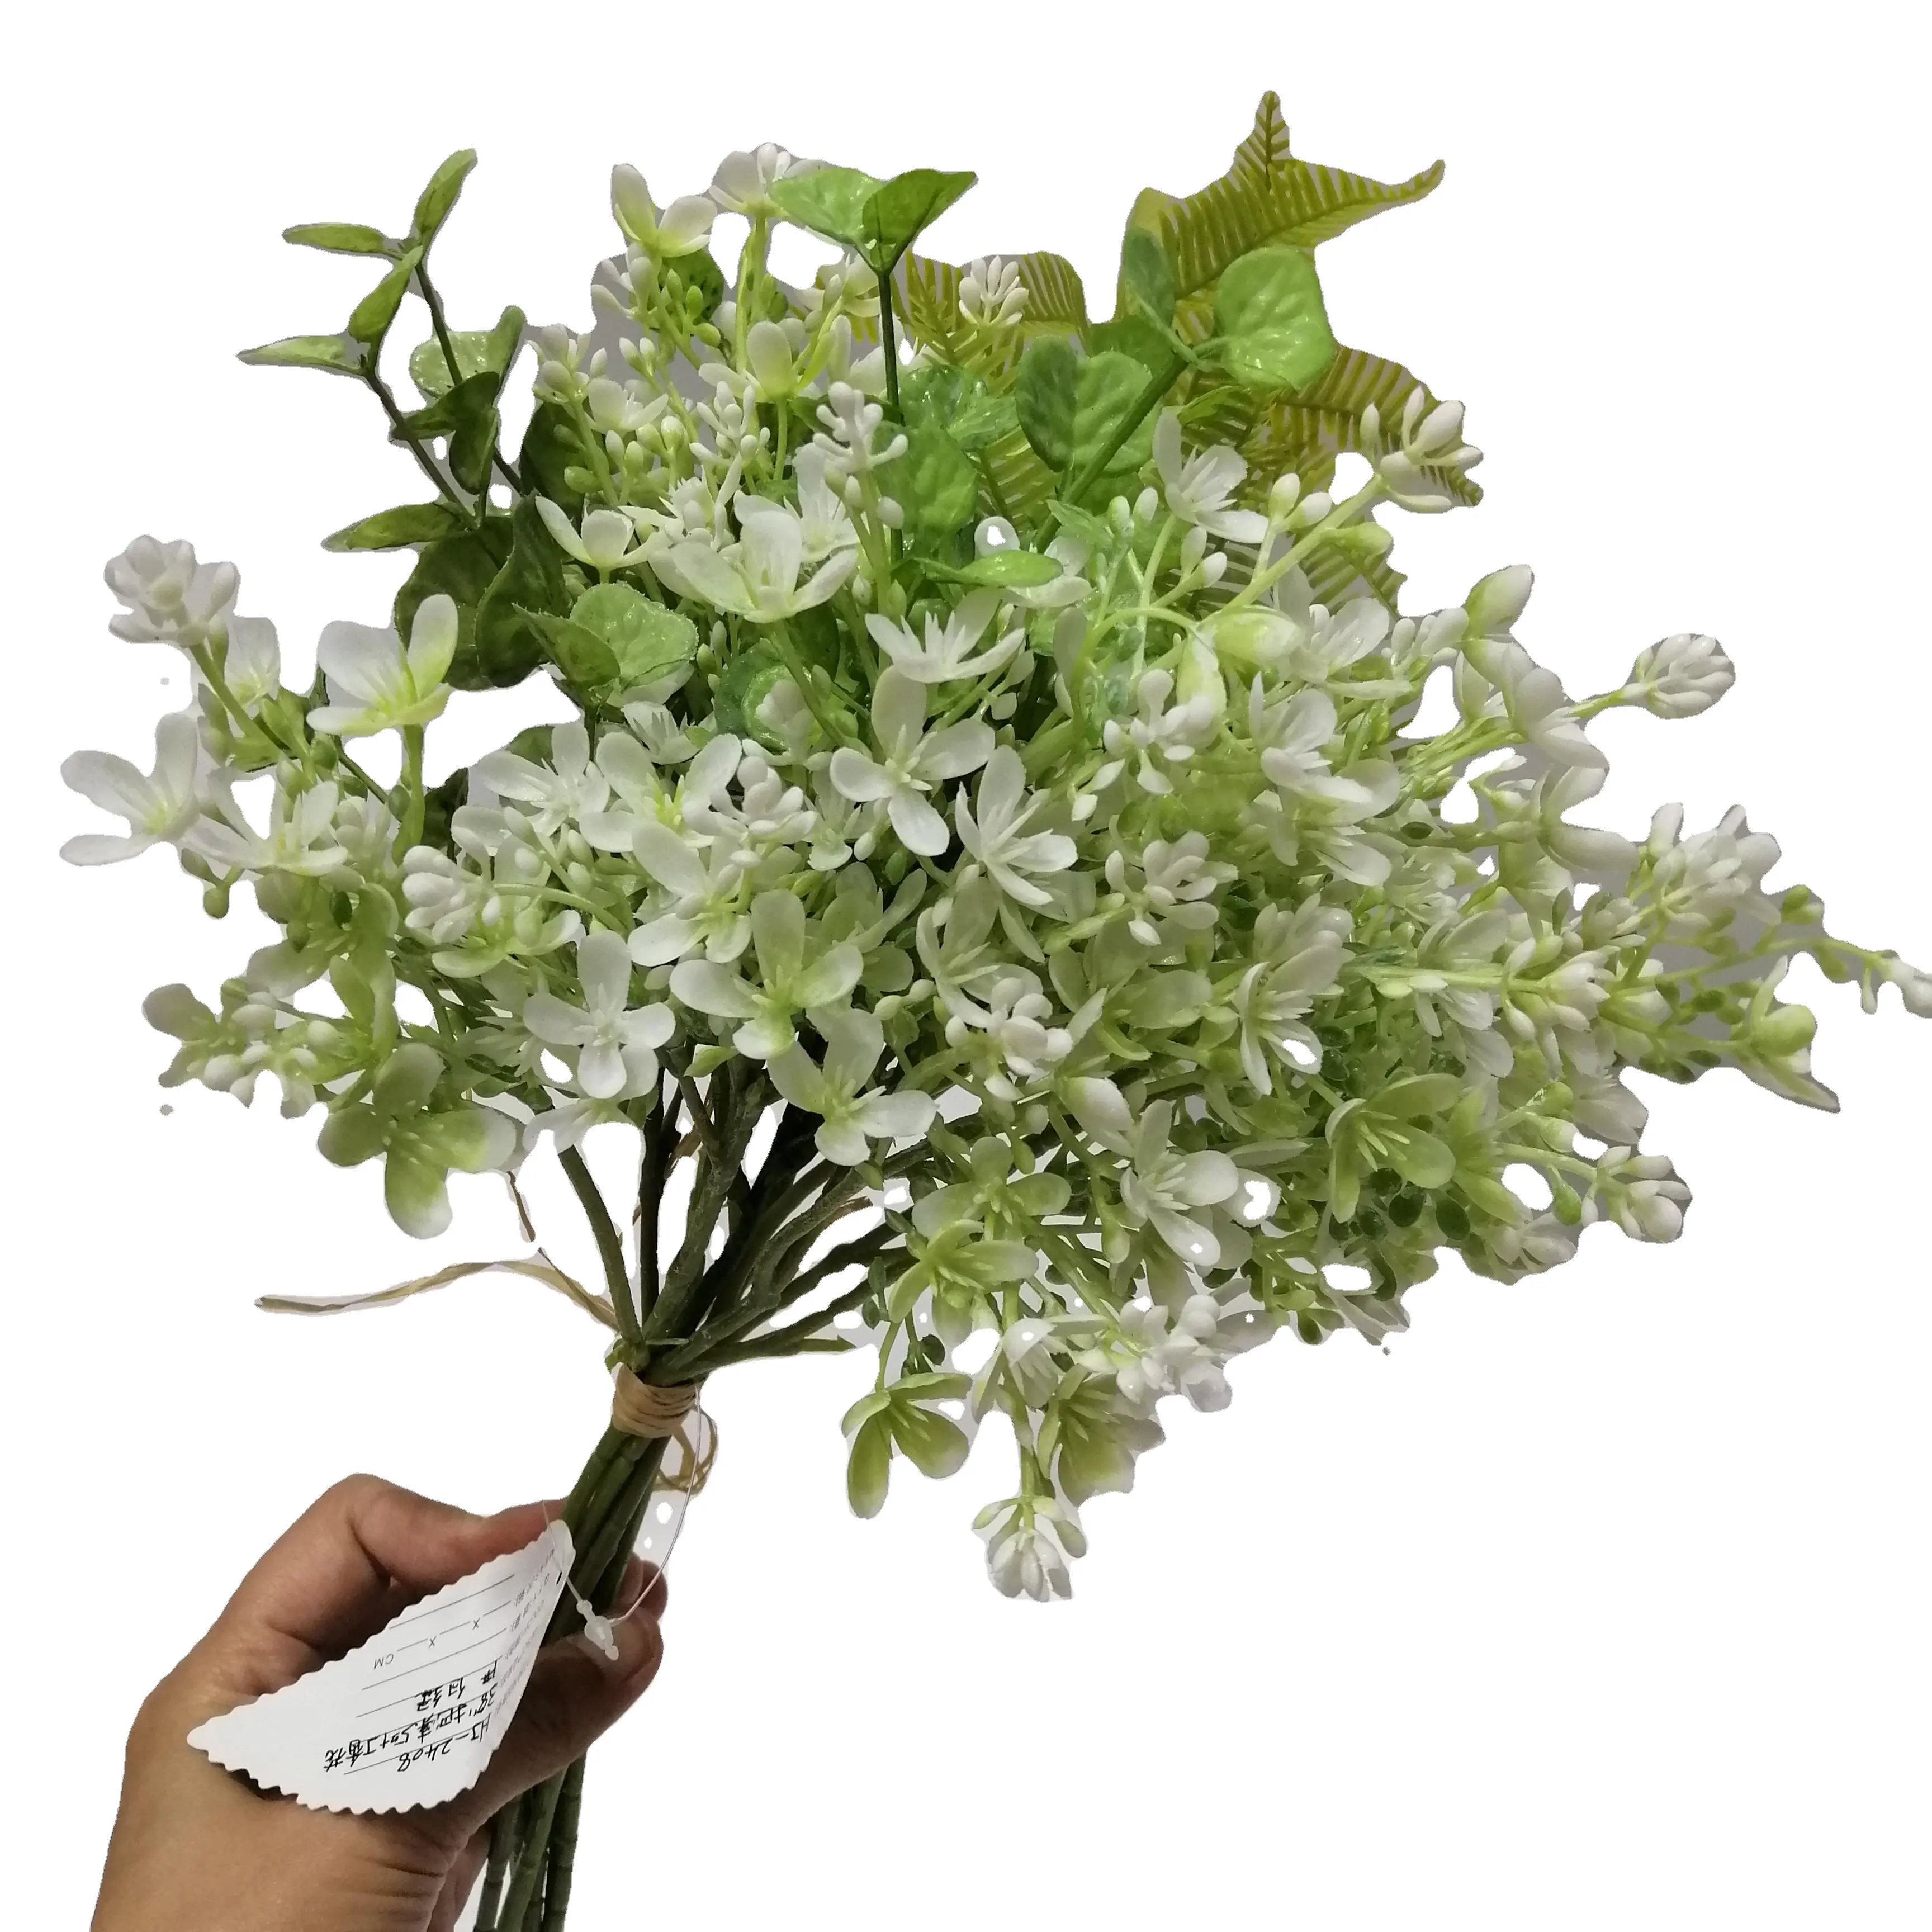 Decorazione domestica di nozze bouquet artificiale decorazione floreale vaso lilla artificiale fiori bianchi in miniatura